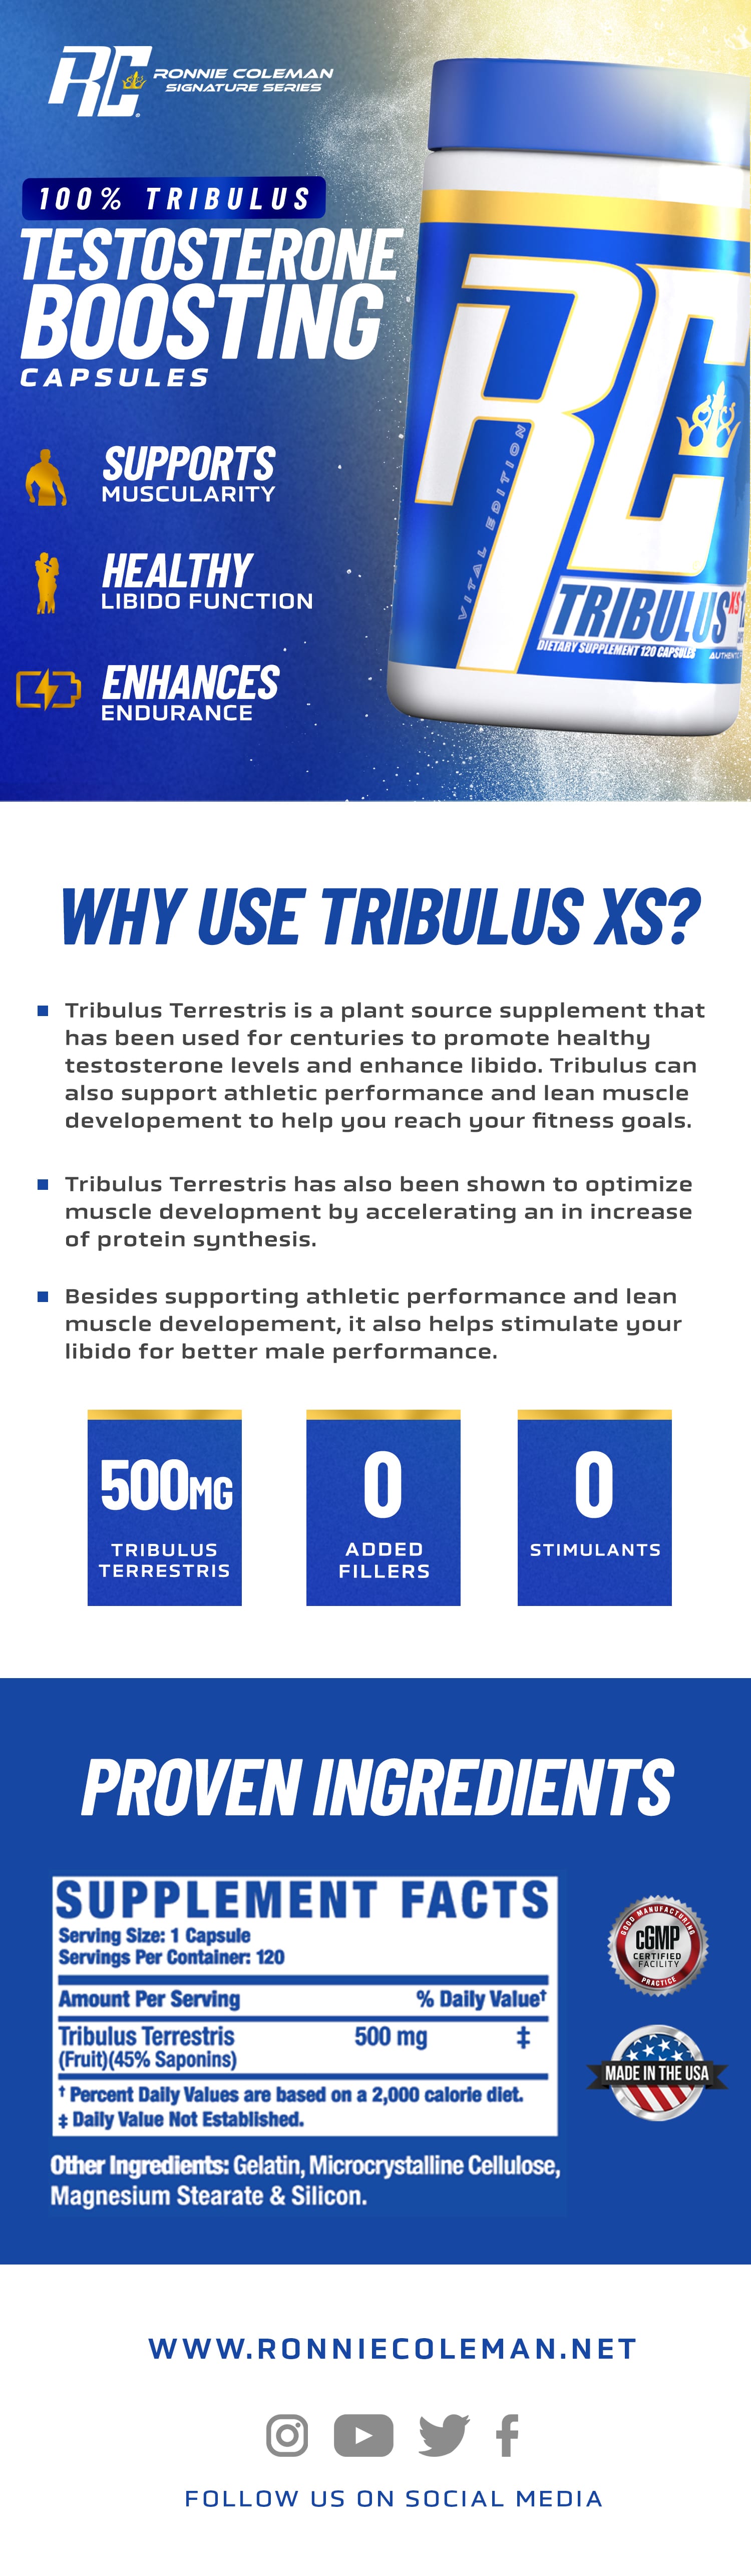 Tribulus XS - Testosterone Boosting Capsules